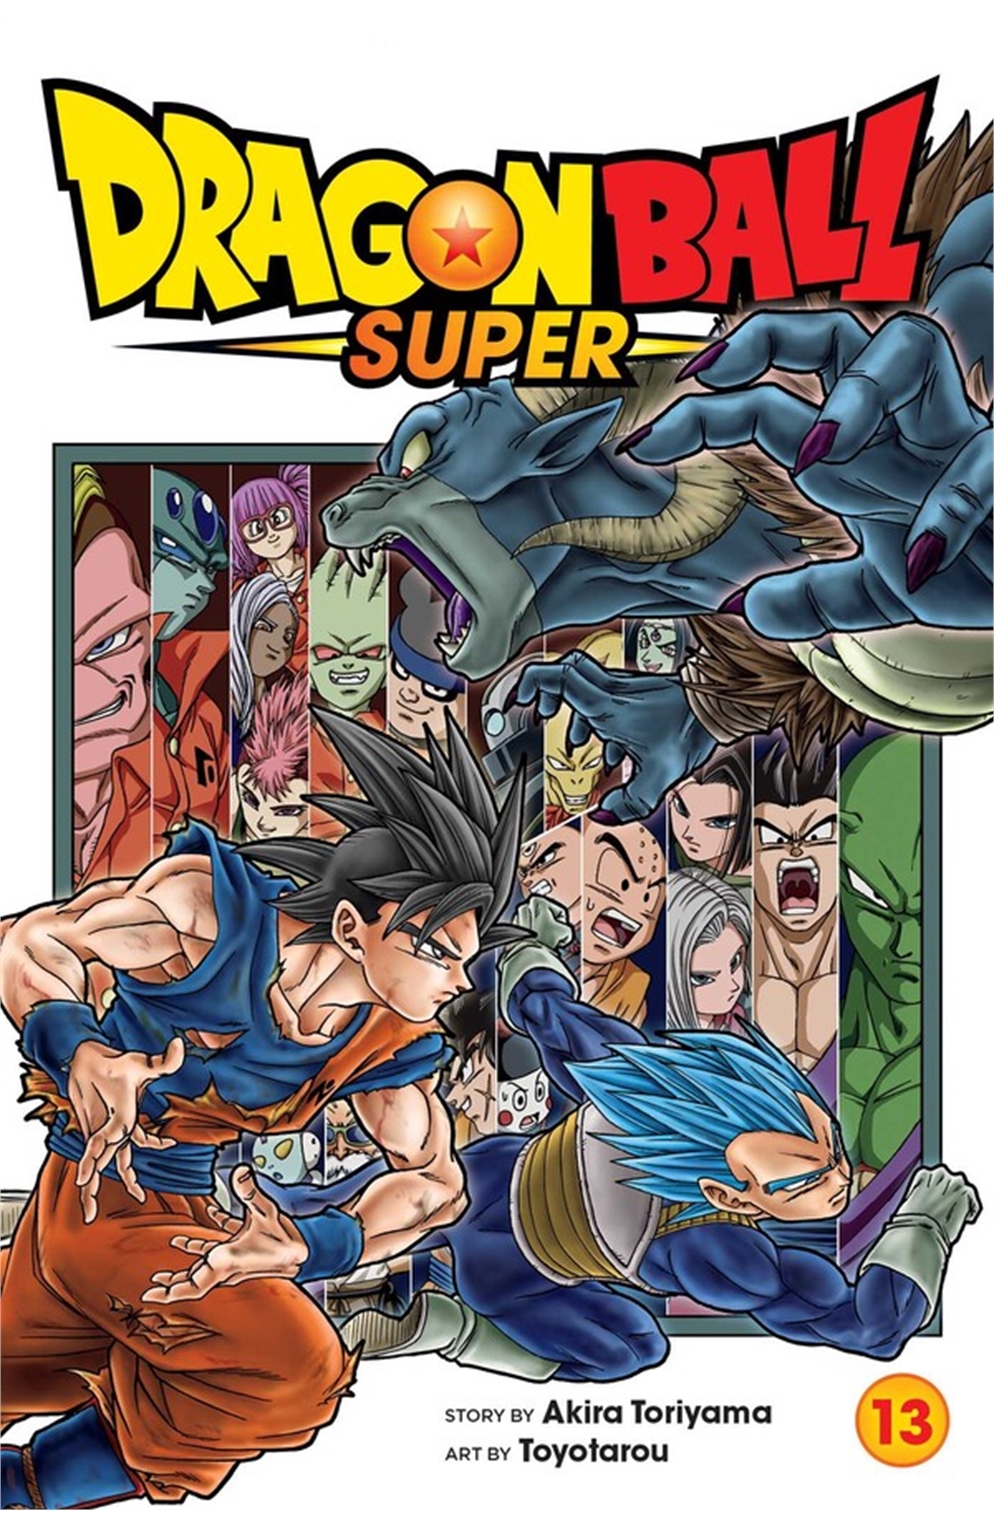 Dragon Ball Super Manga Volume 13 ($11.99)